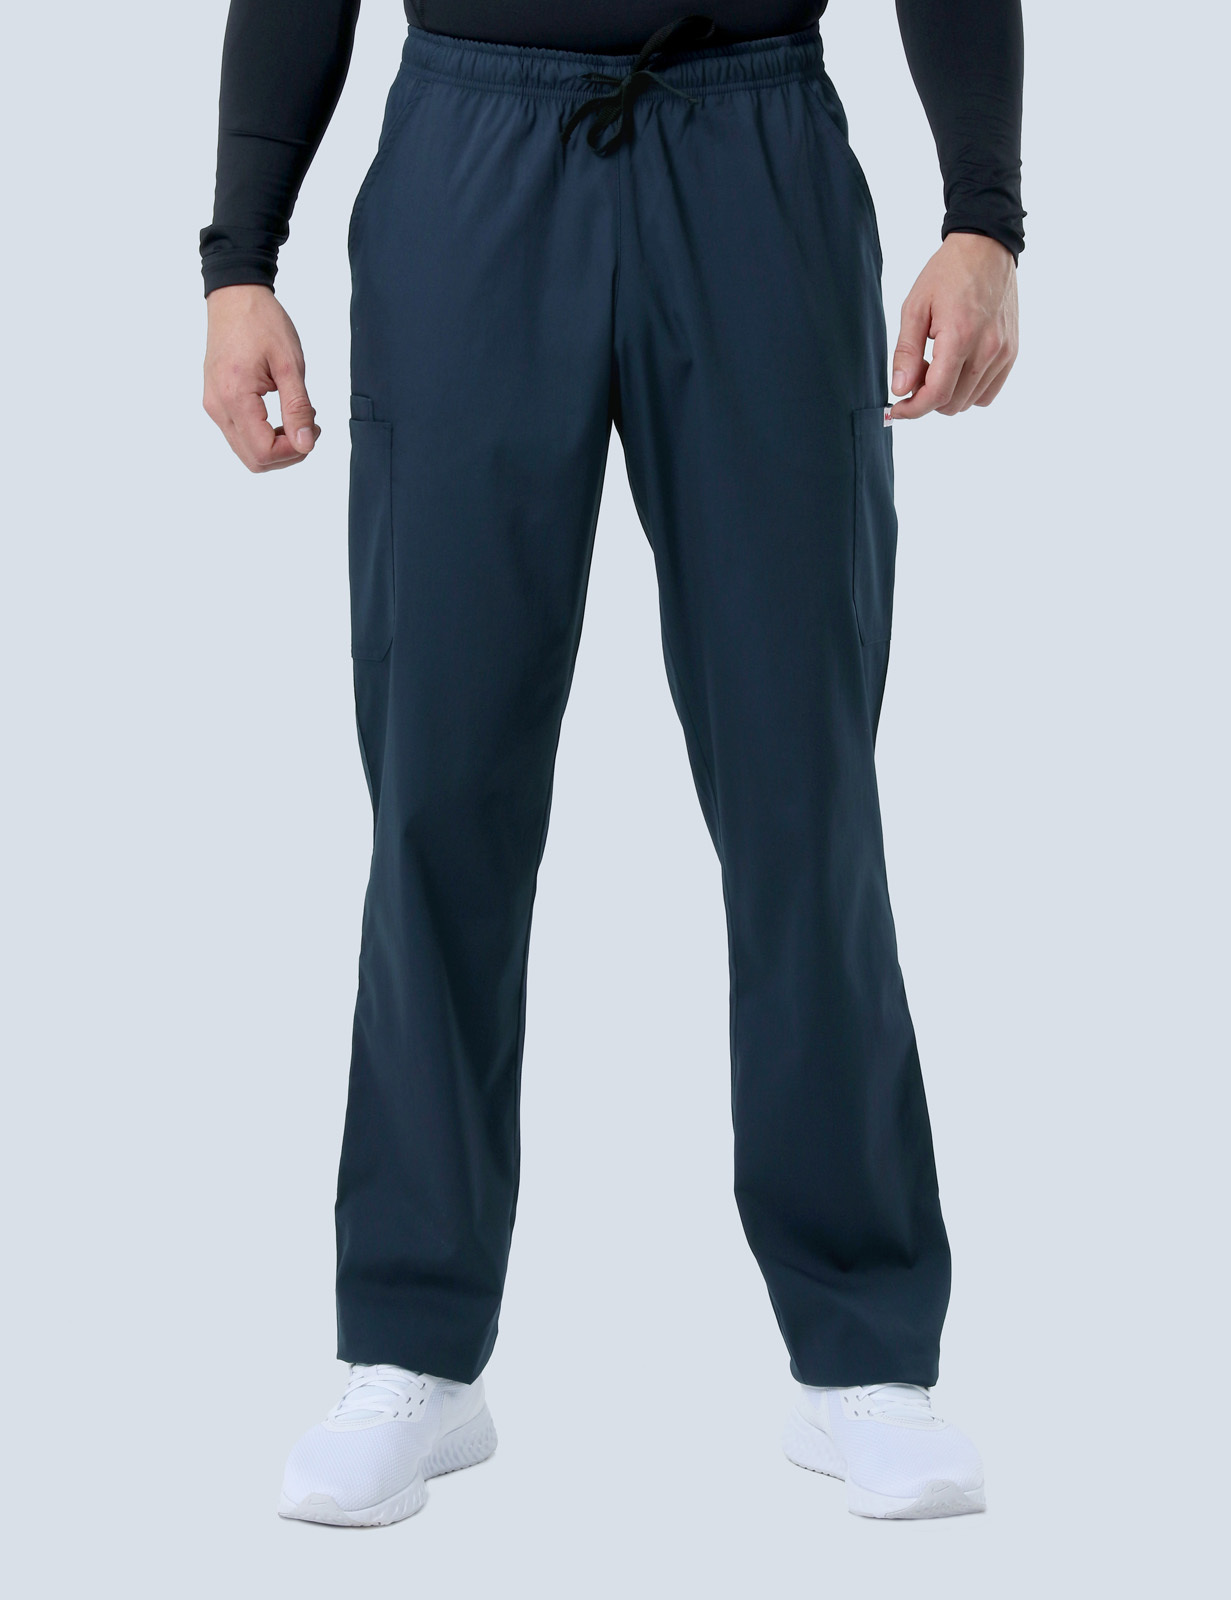 Men's Cargo Performance Pants - Navy - Large - Tall